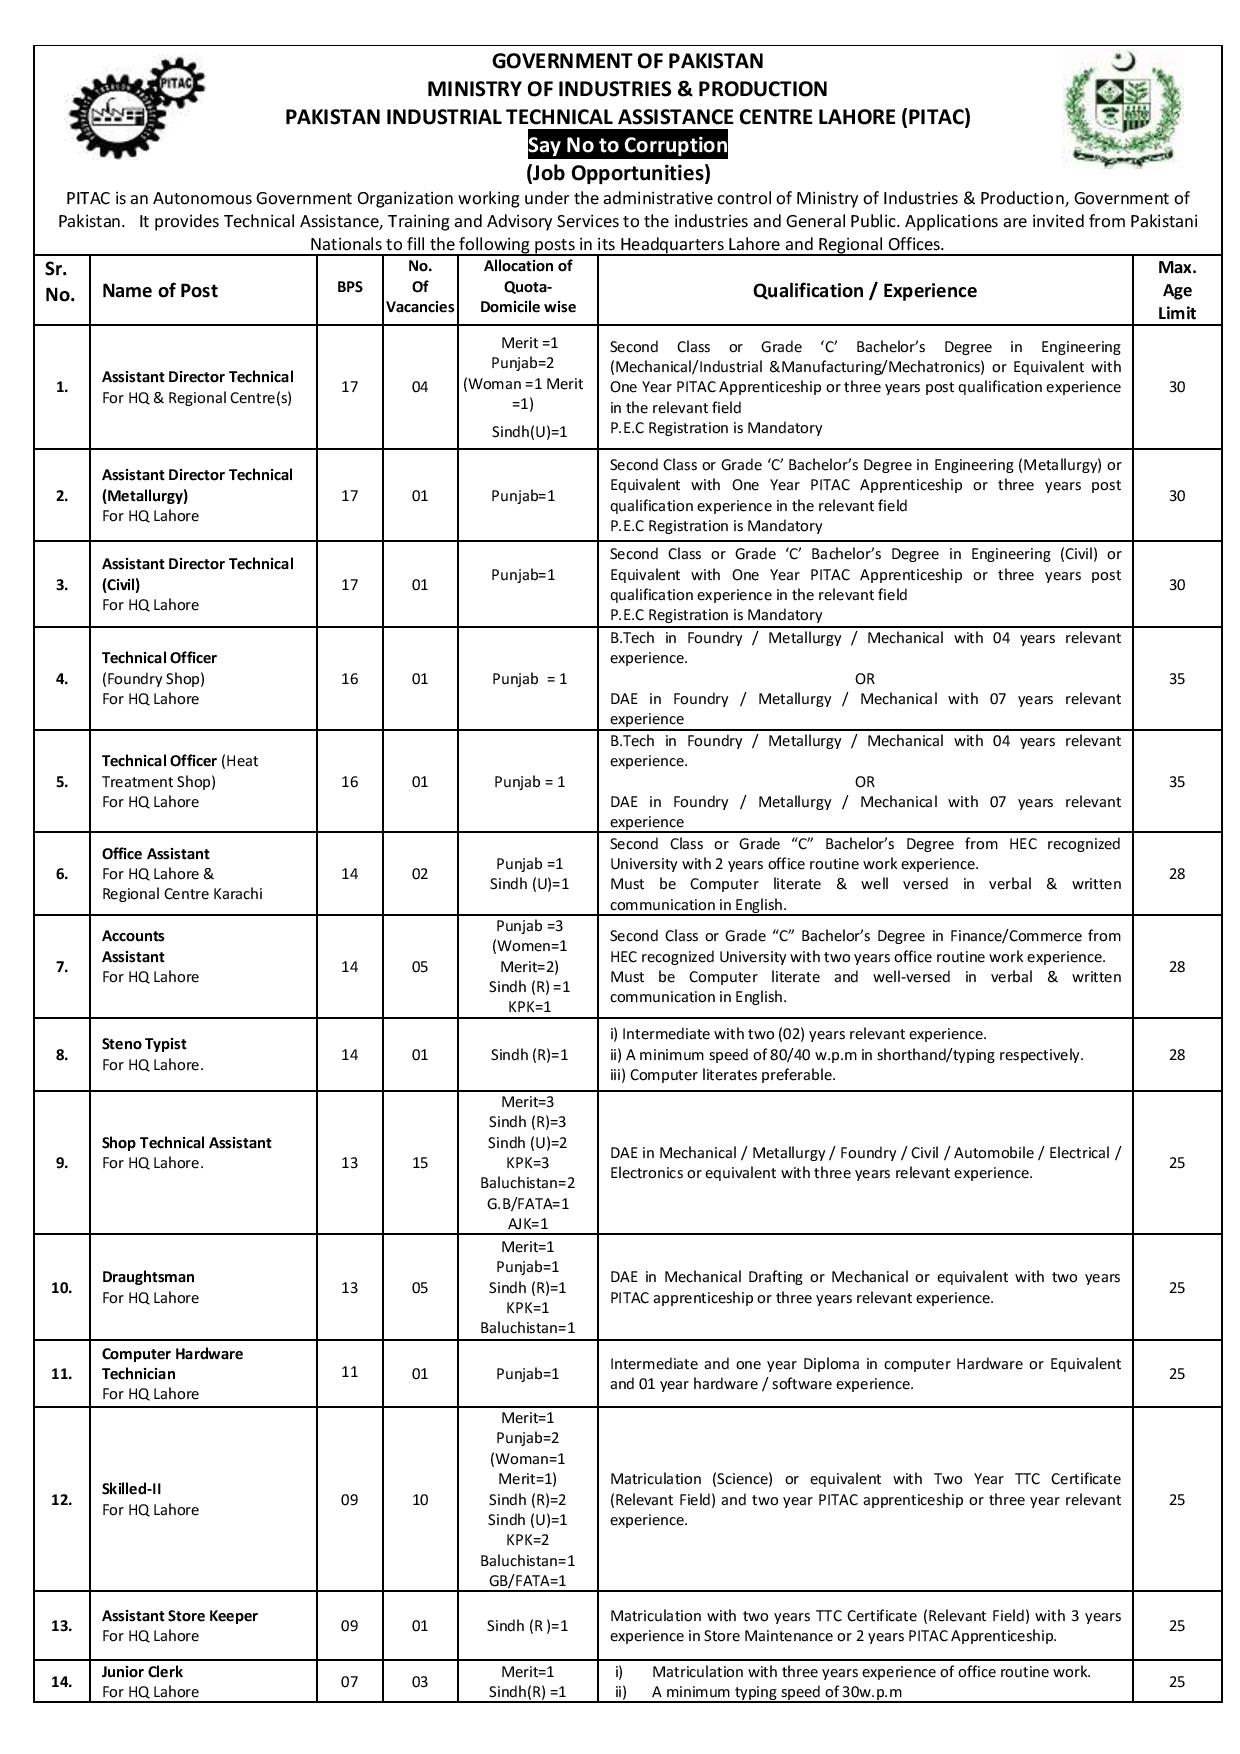 PITAC Lahore Jobs 2017 NTS Application Form Download 01